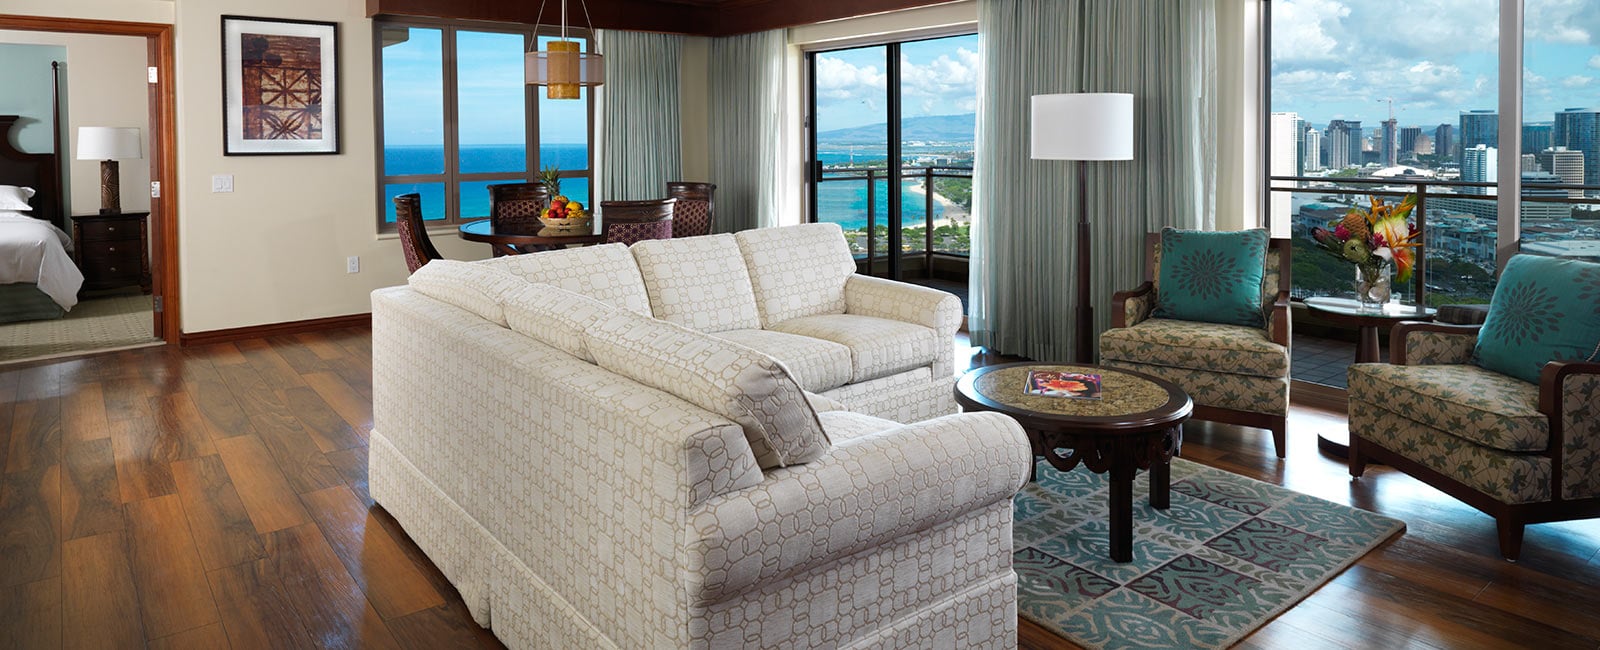 Living Area at Grand Waikikian Resort in Honolulu, Hawaii